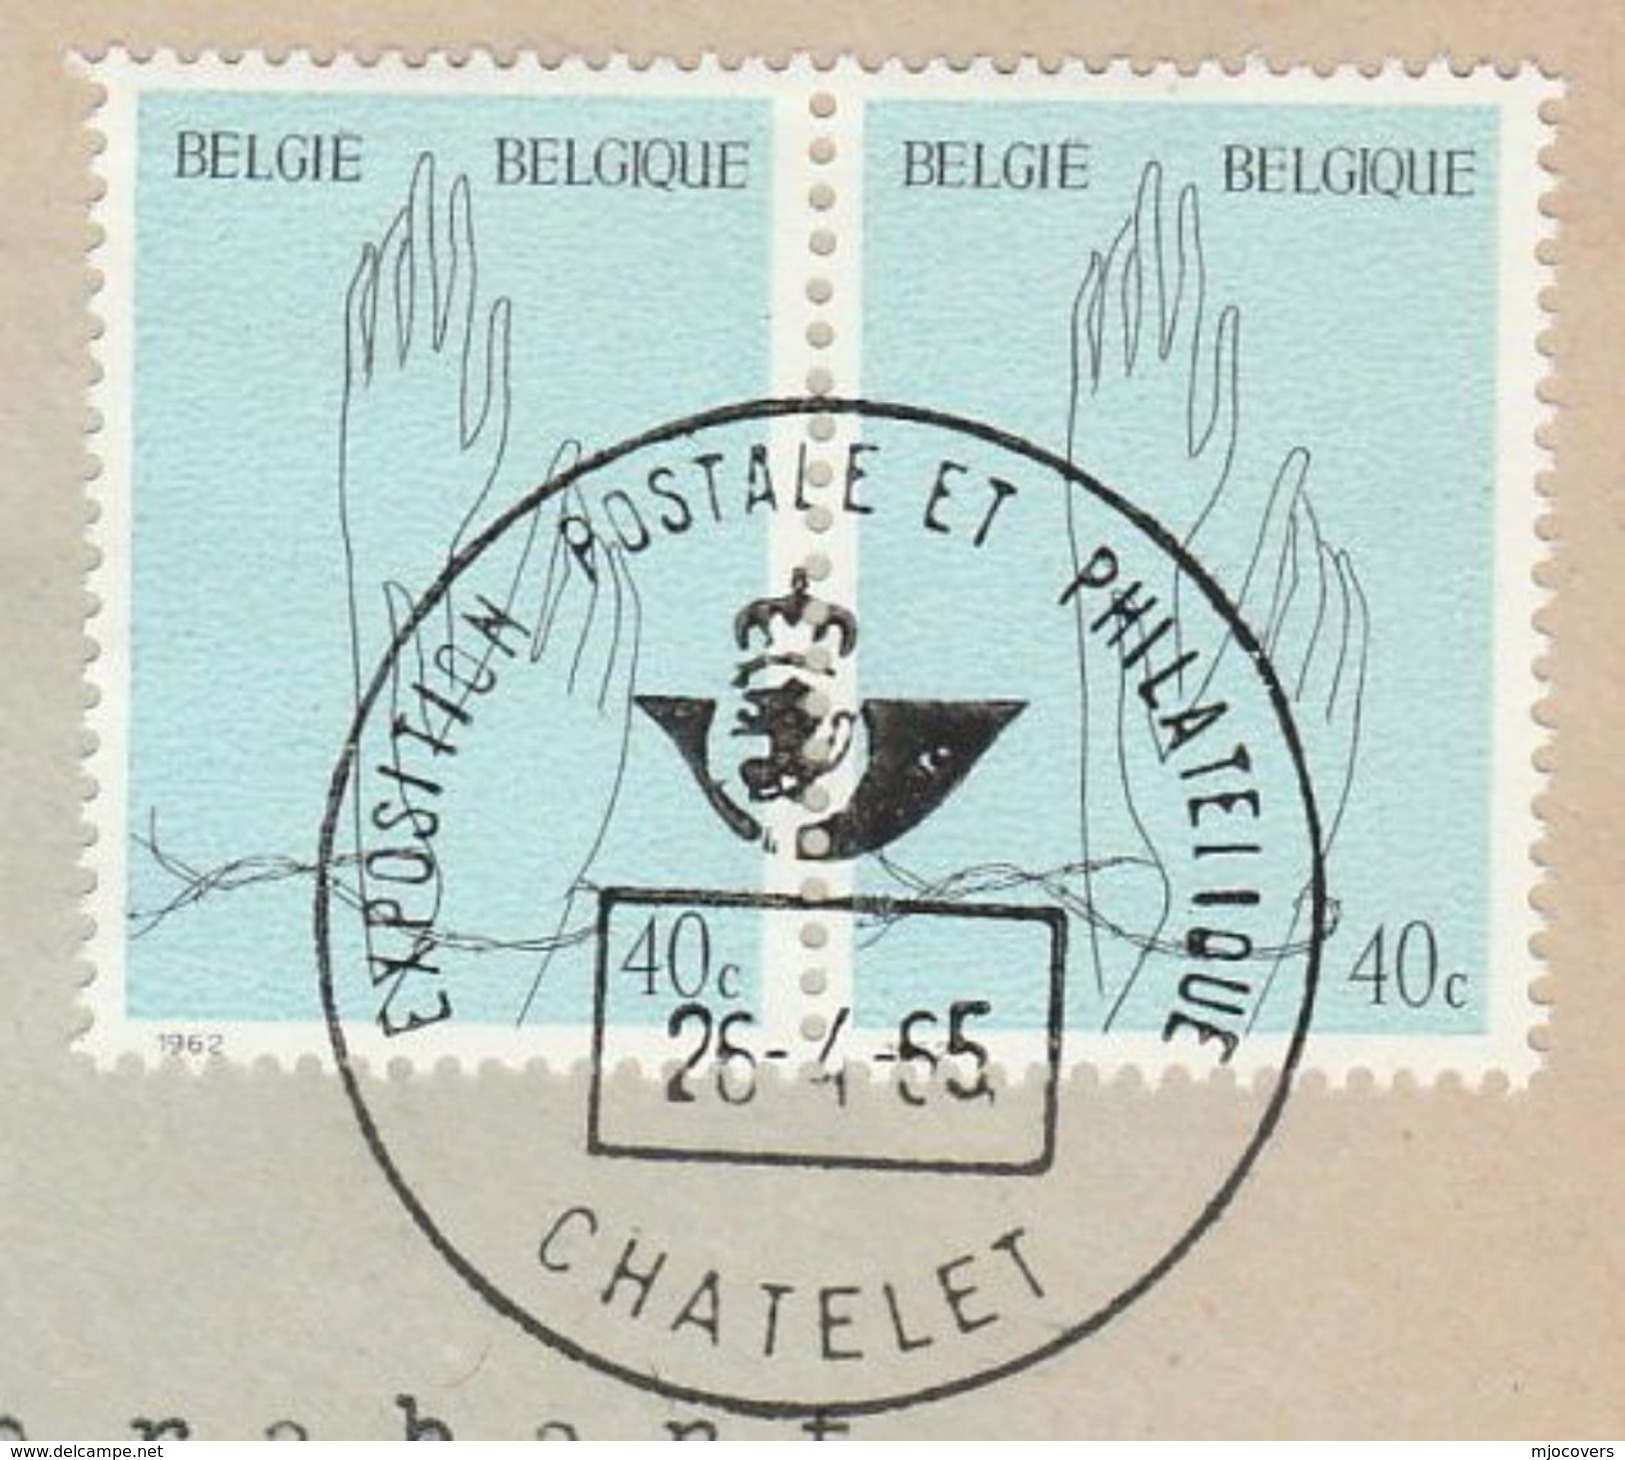 1965 BELGIUM COVER EVENT Pmk CHATELET PHILATELIC EXPOSITION, Stamps - Philatelic Exhibitions